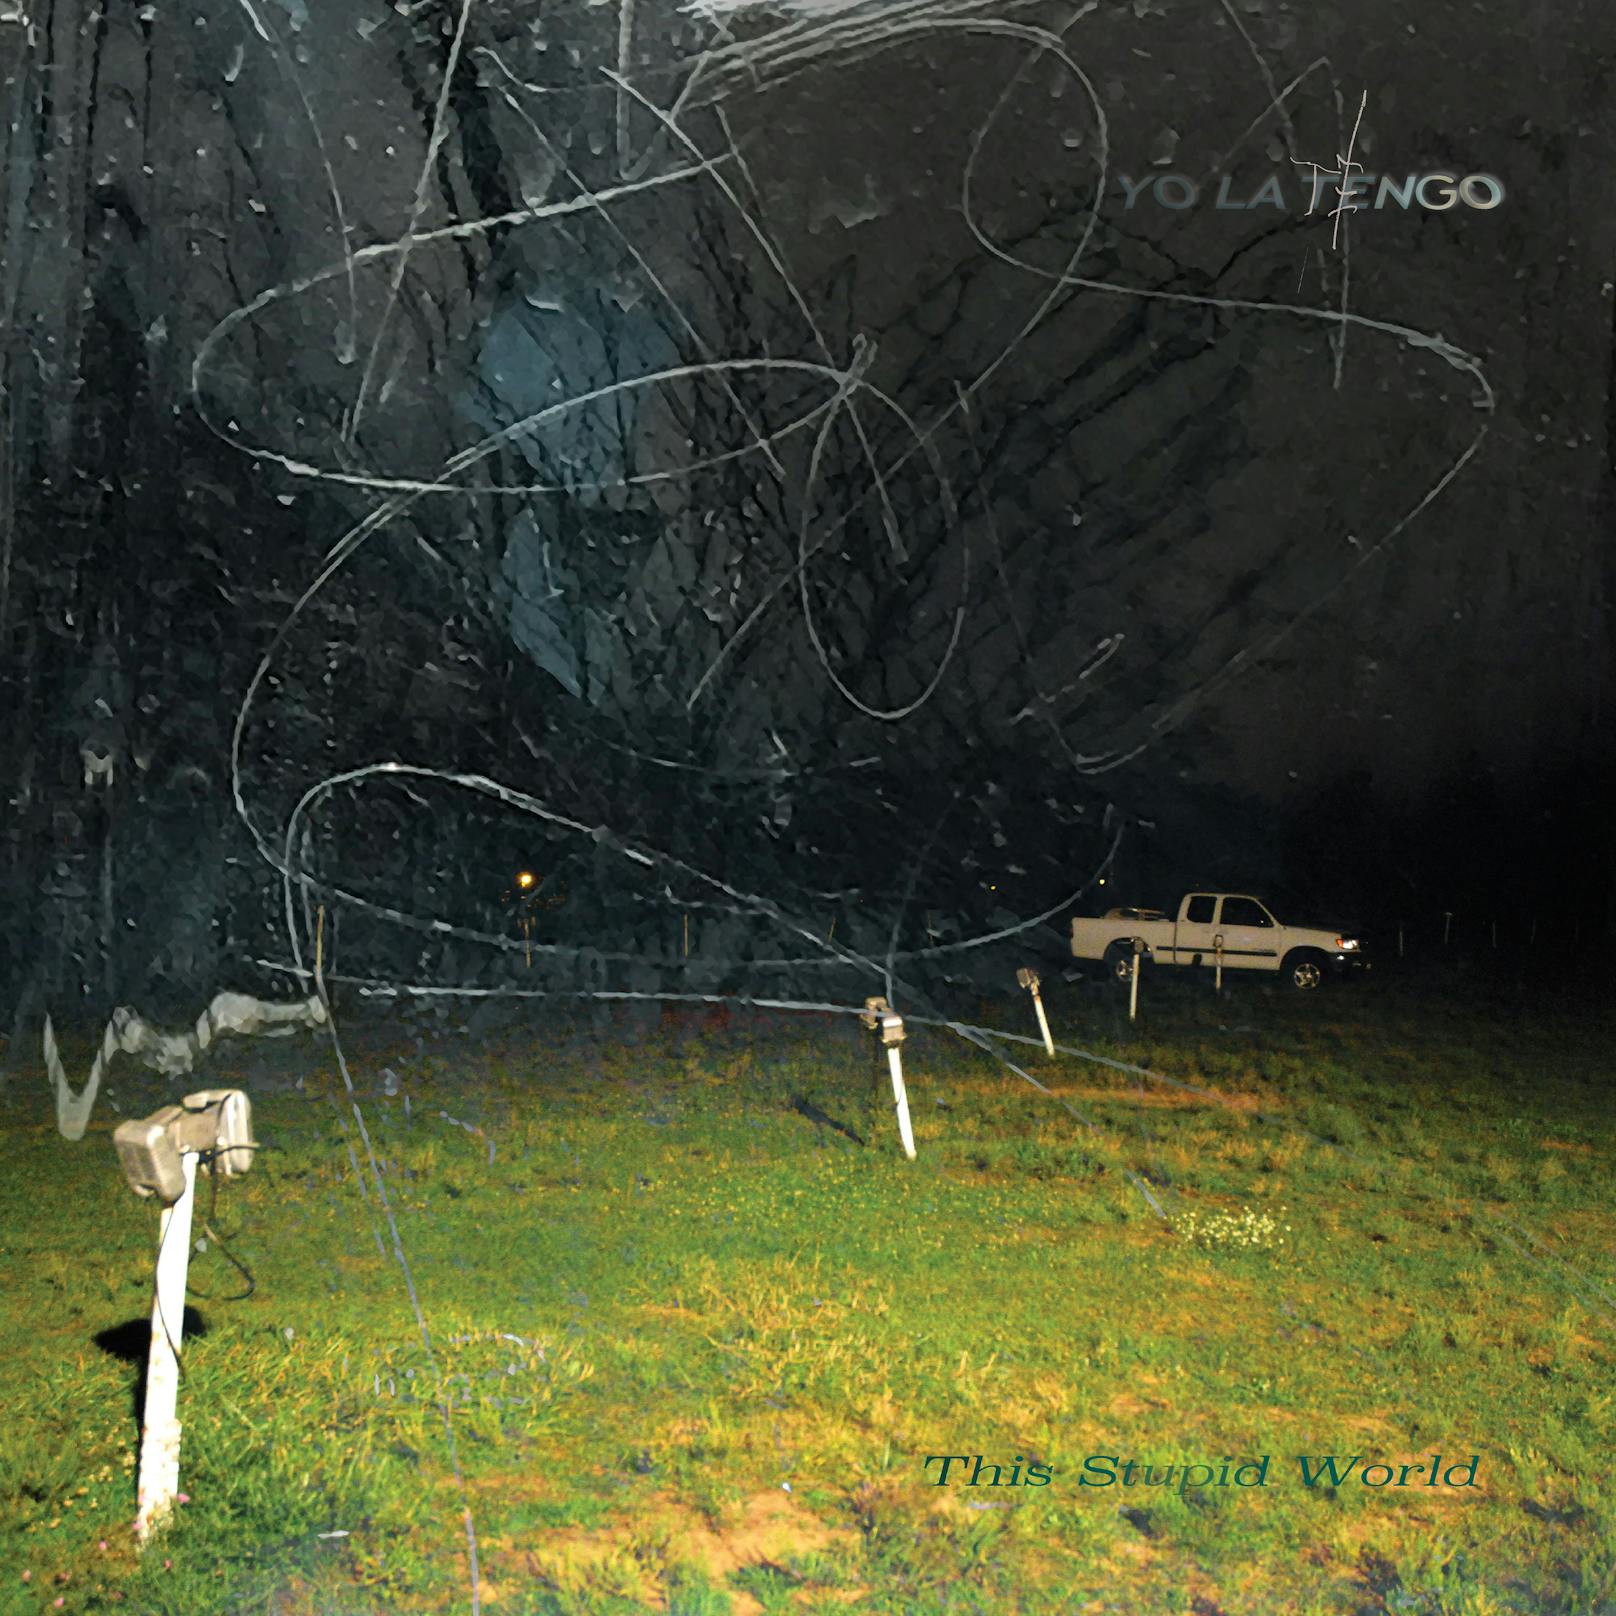 <strong>Yo La Tengo</strong>s neues Album "This Stupid World" erscheint am 10 Februar 2023.